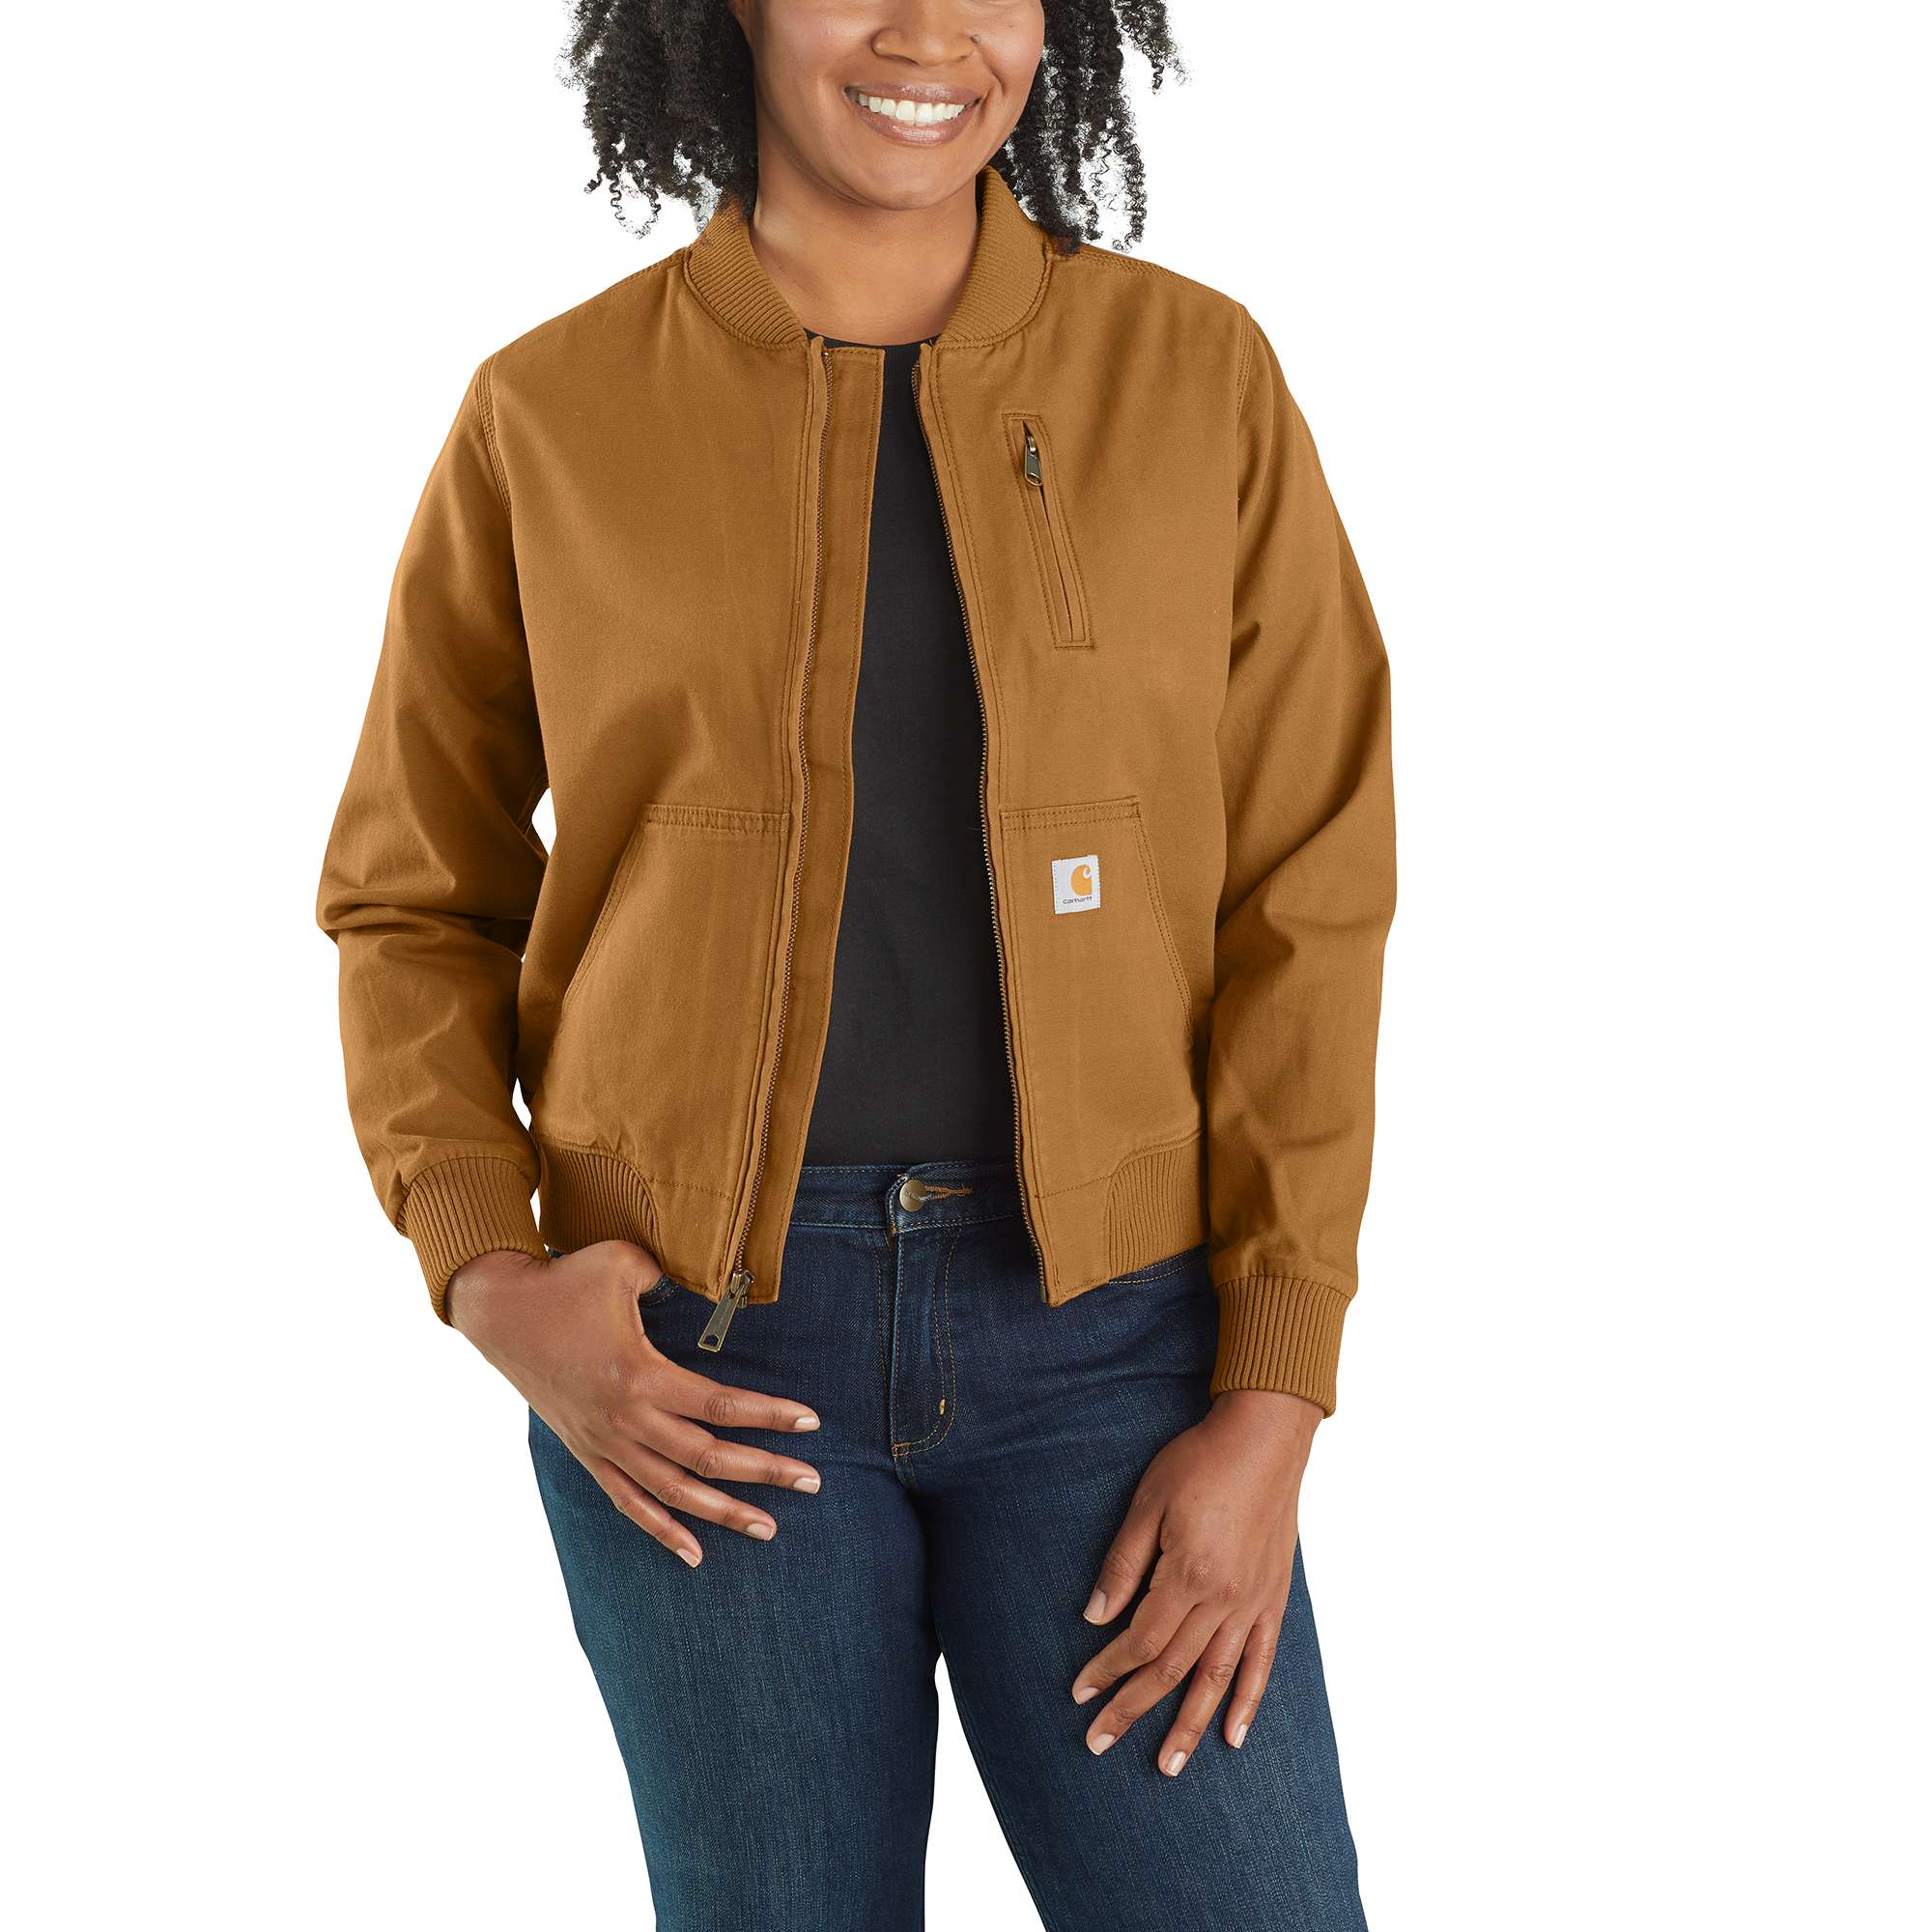 Carhartt Women's Carhartt Brown Canvas Work Jacket (Small) in the